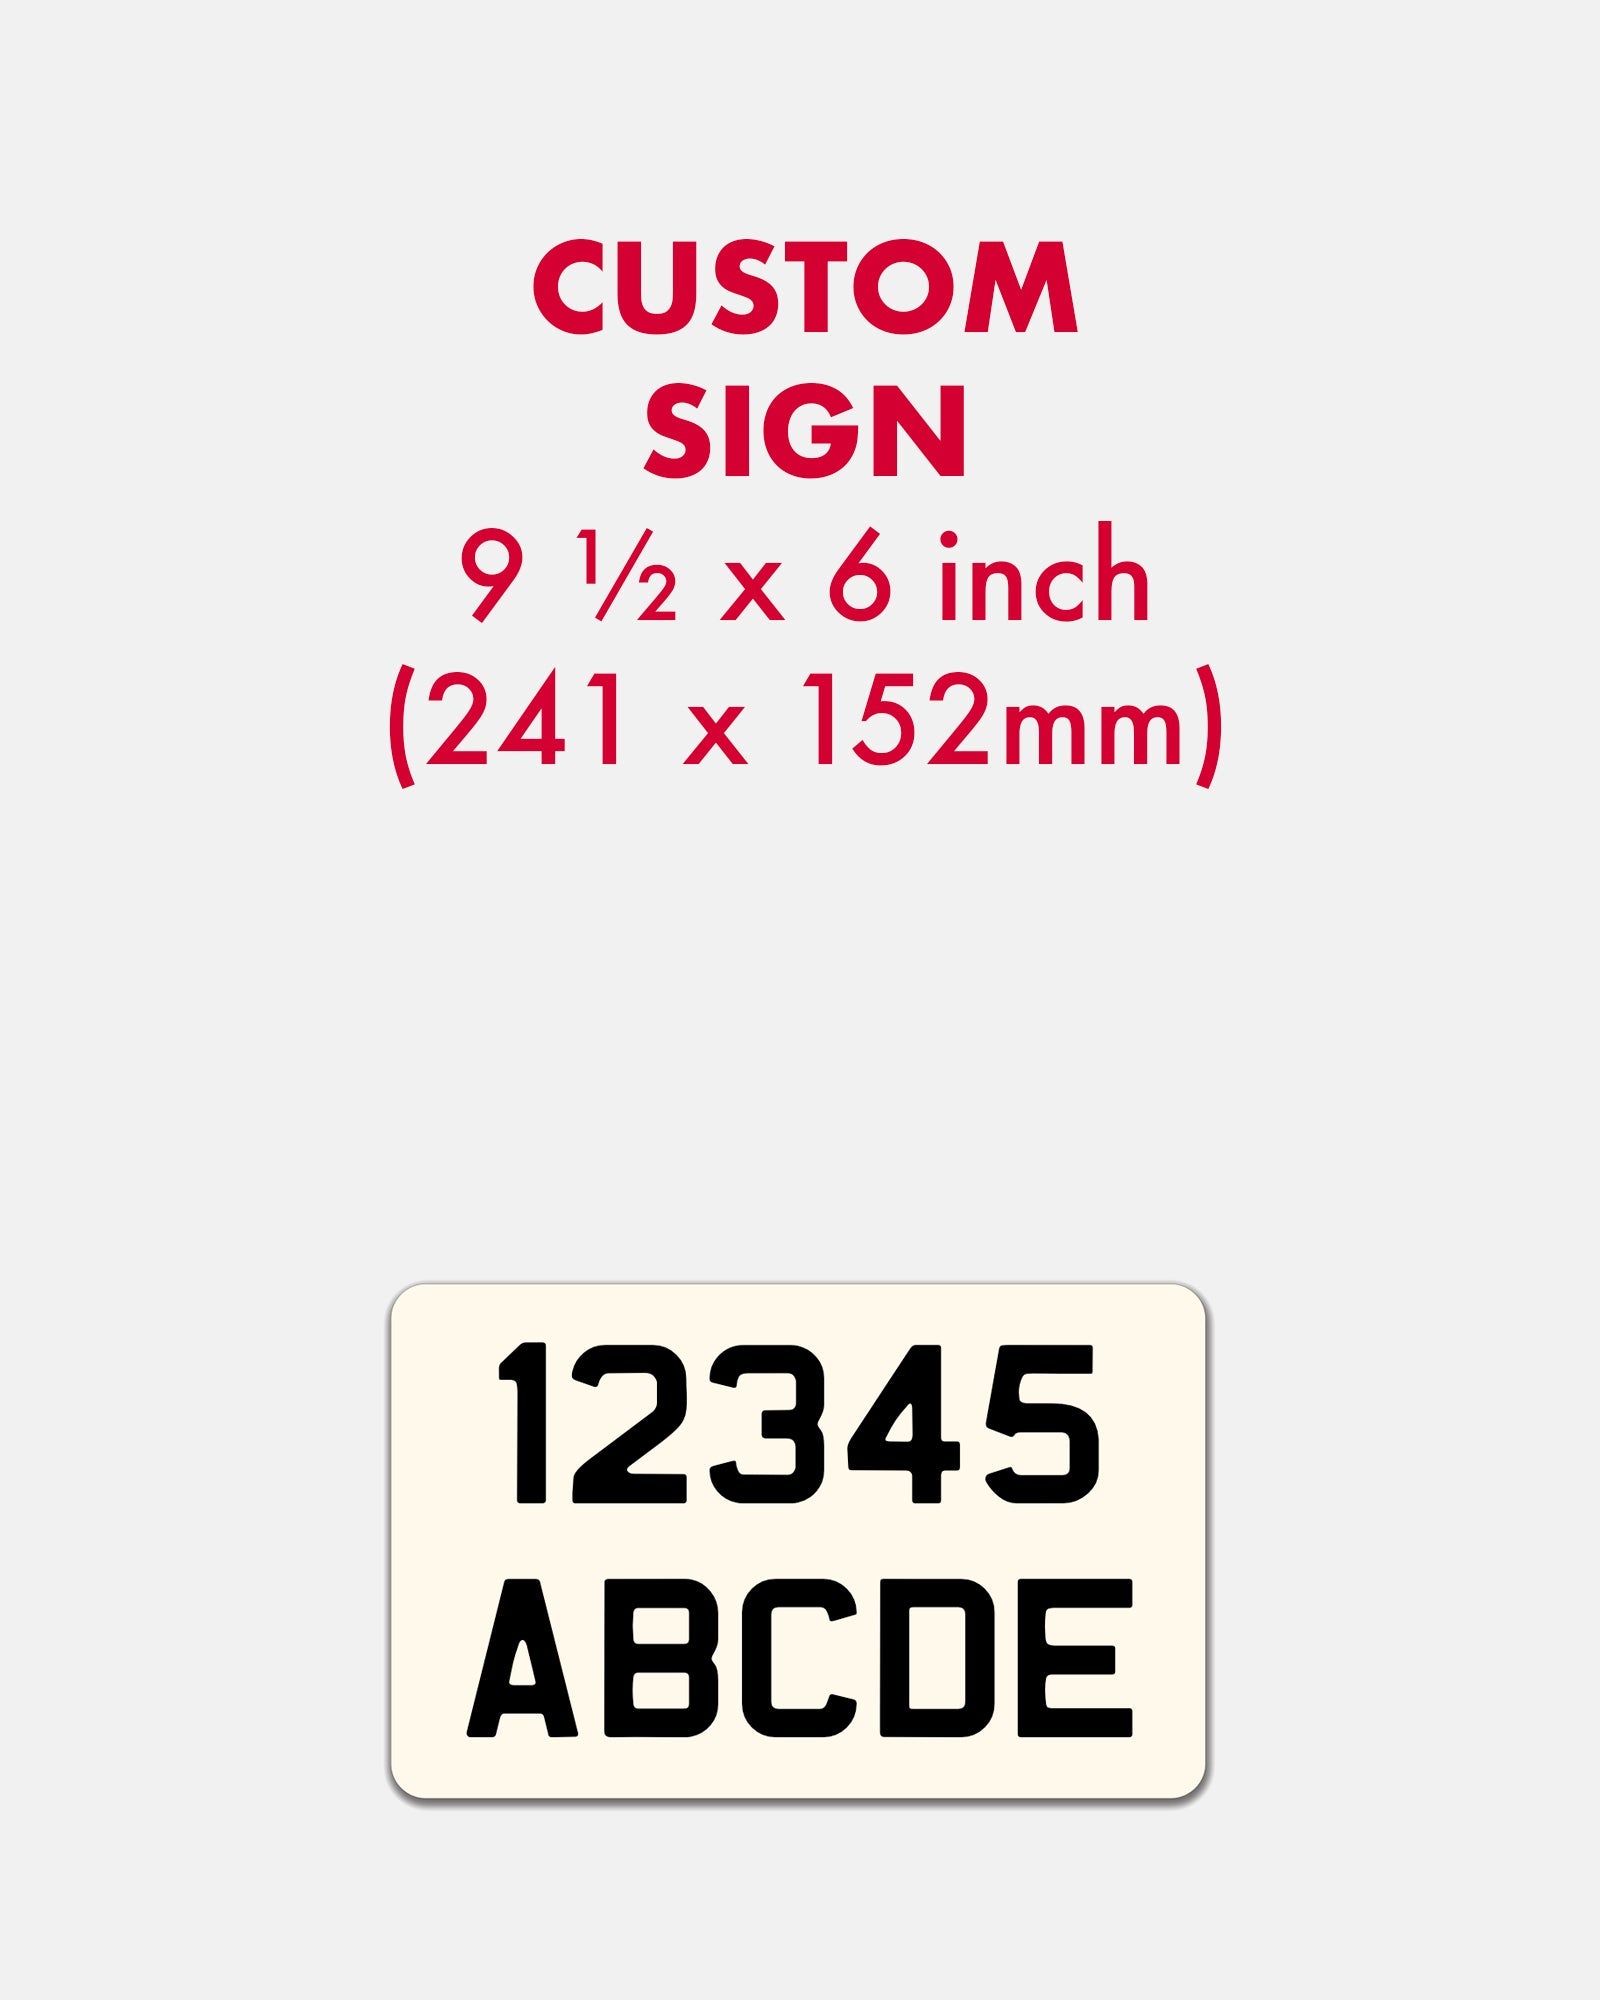 Custom Enamel Rectangle Sign (9 ½ x 6 inch) - BRIT LOCKER